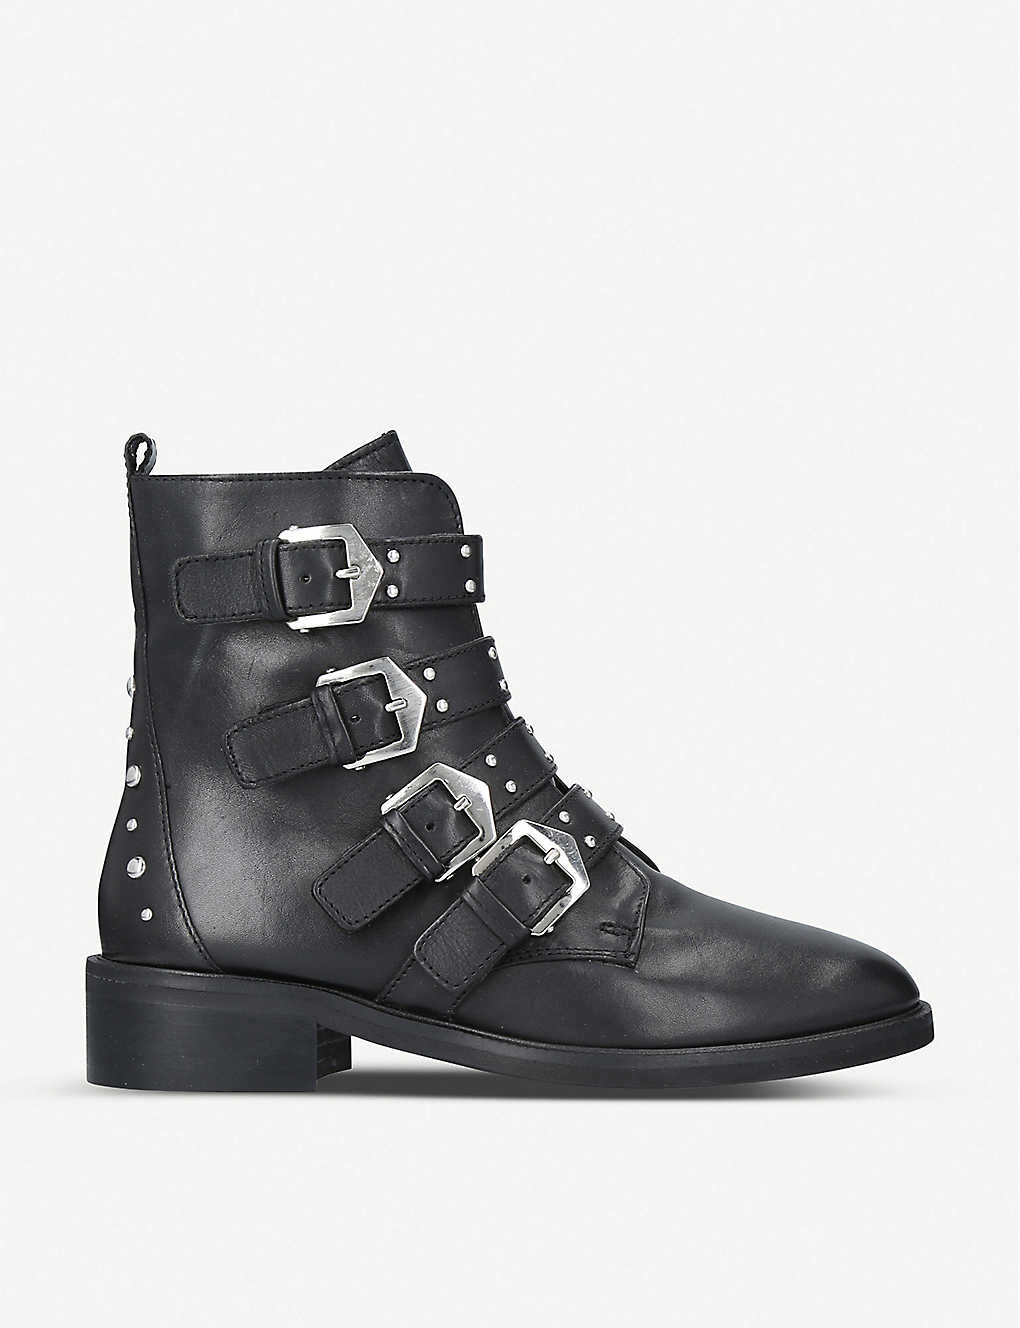 CARVELA - Scant leather ankle boots | Selfridges.com